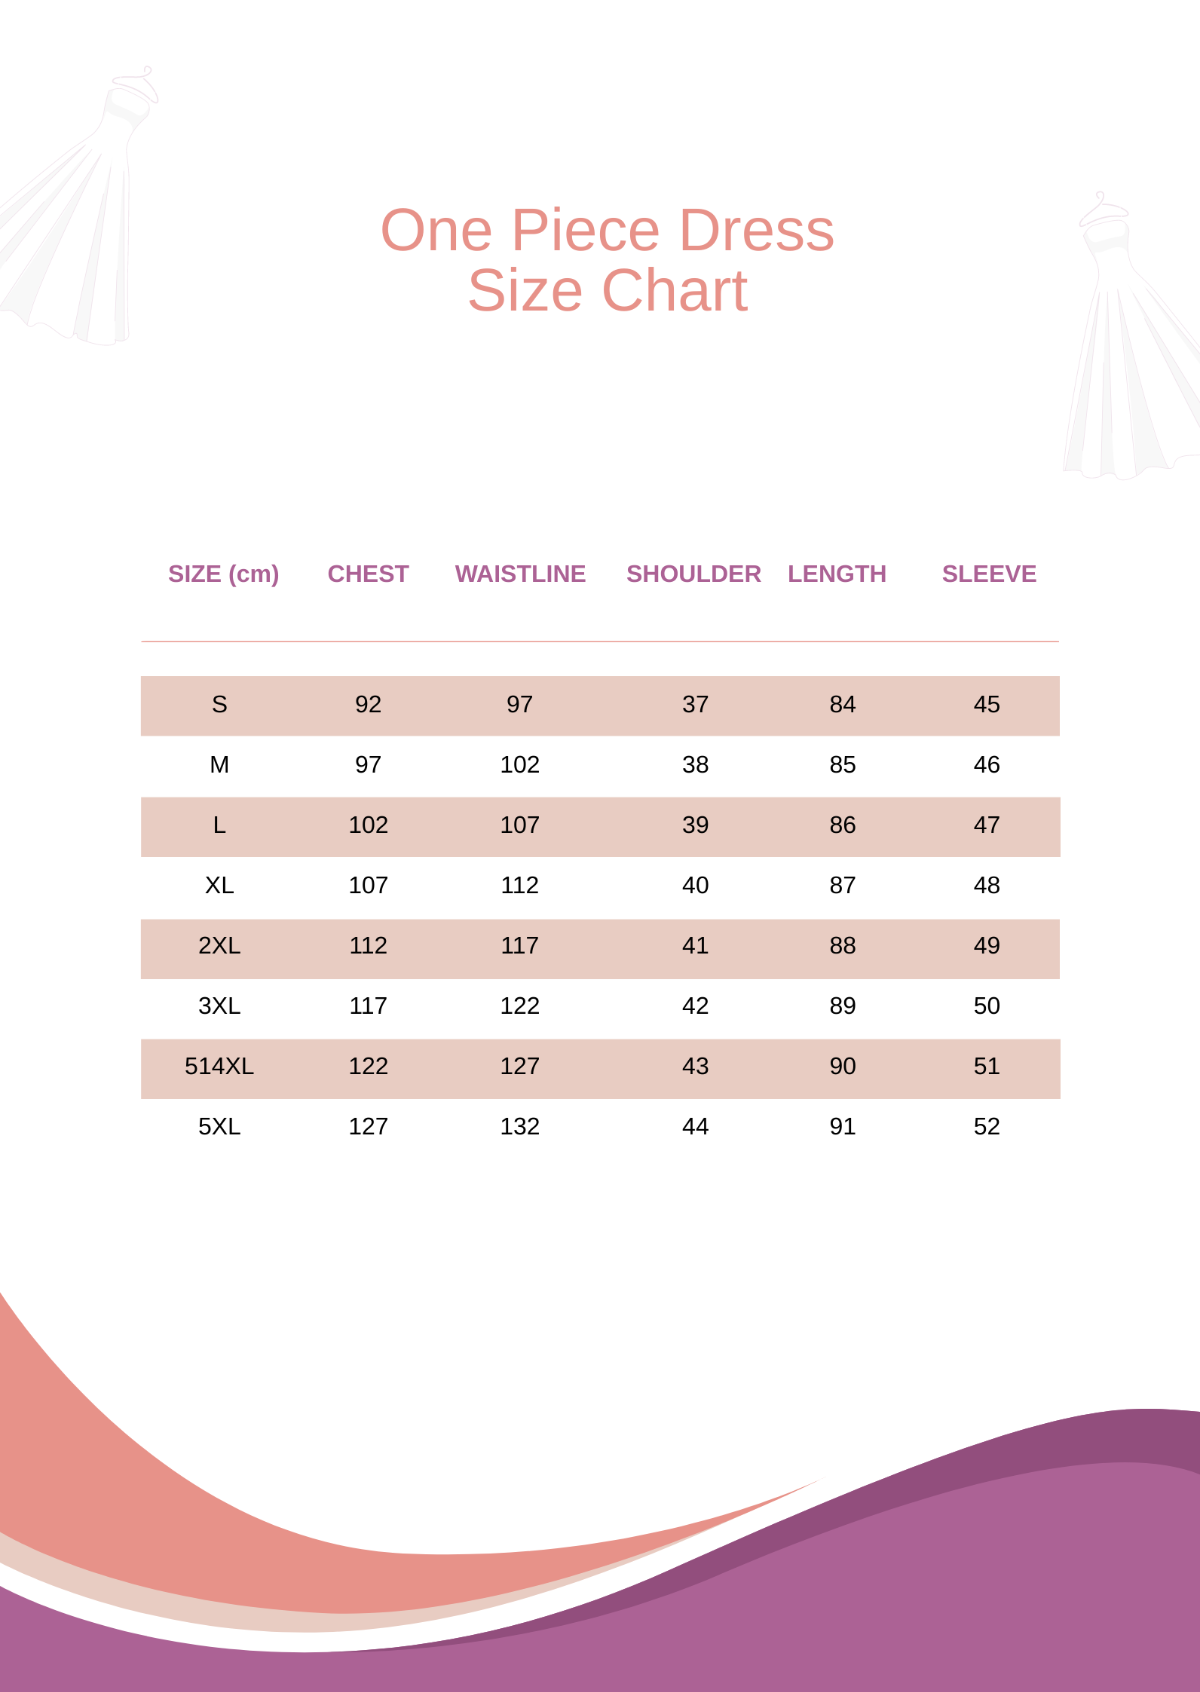 One Piece Dress Size Chart